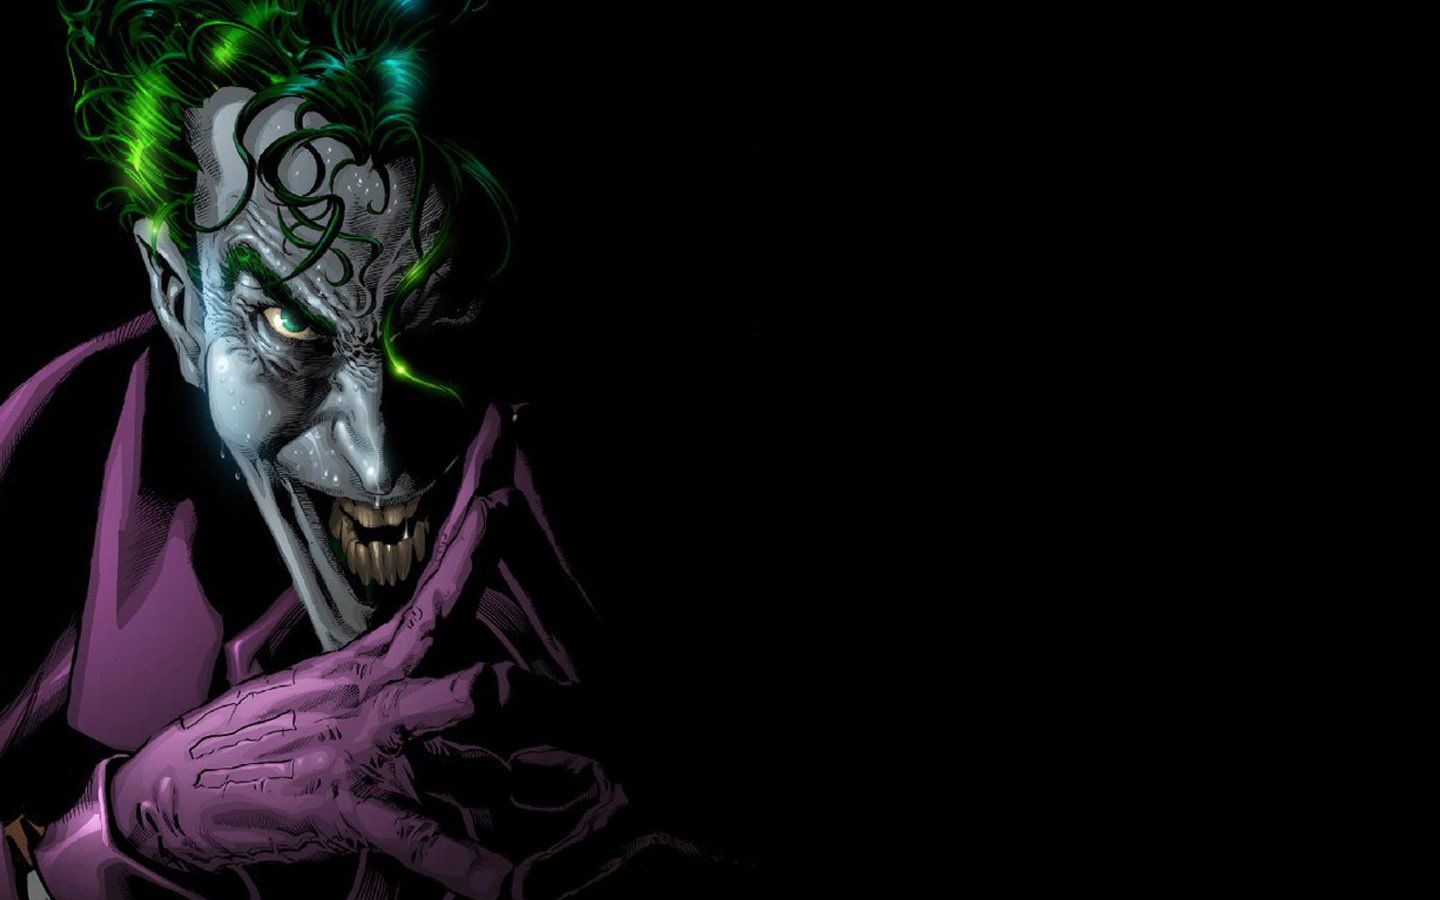 DC Comics The Joker free desktop background and wallpaper